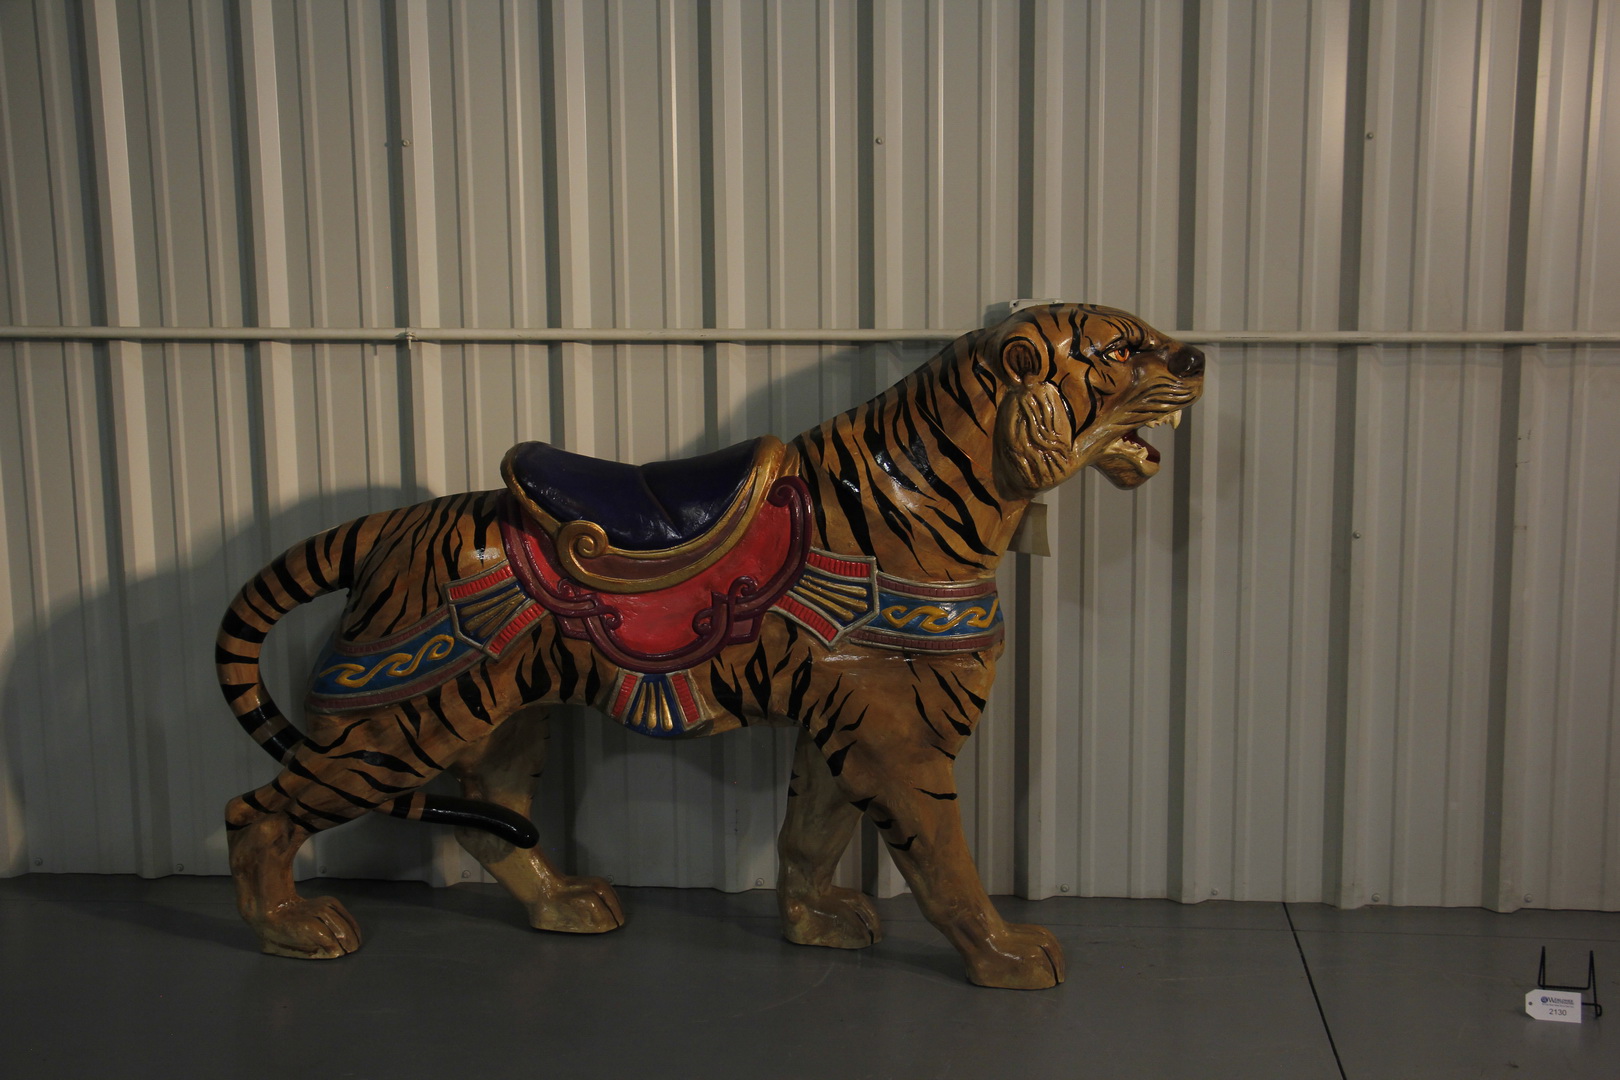 Salk & Holley ride a tiger carousel 